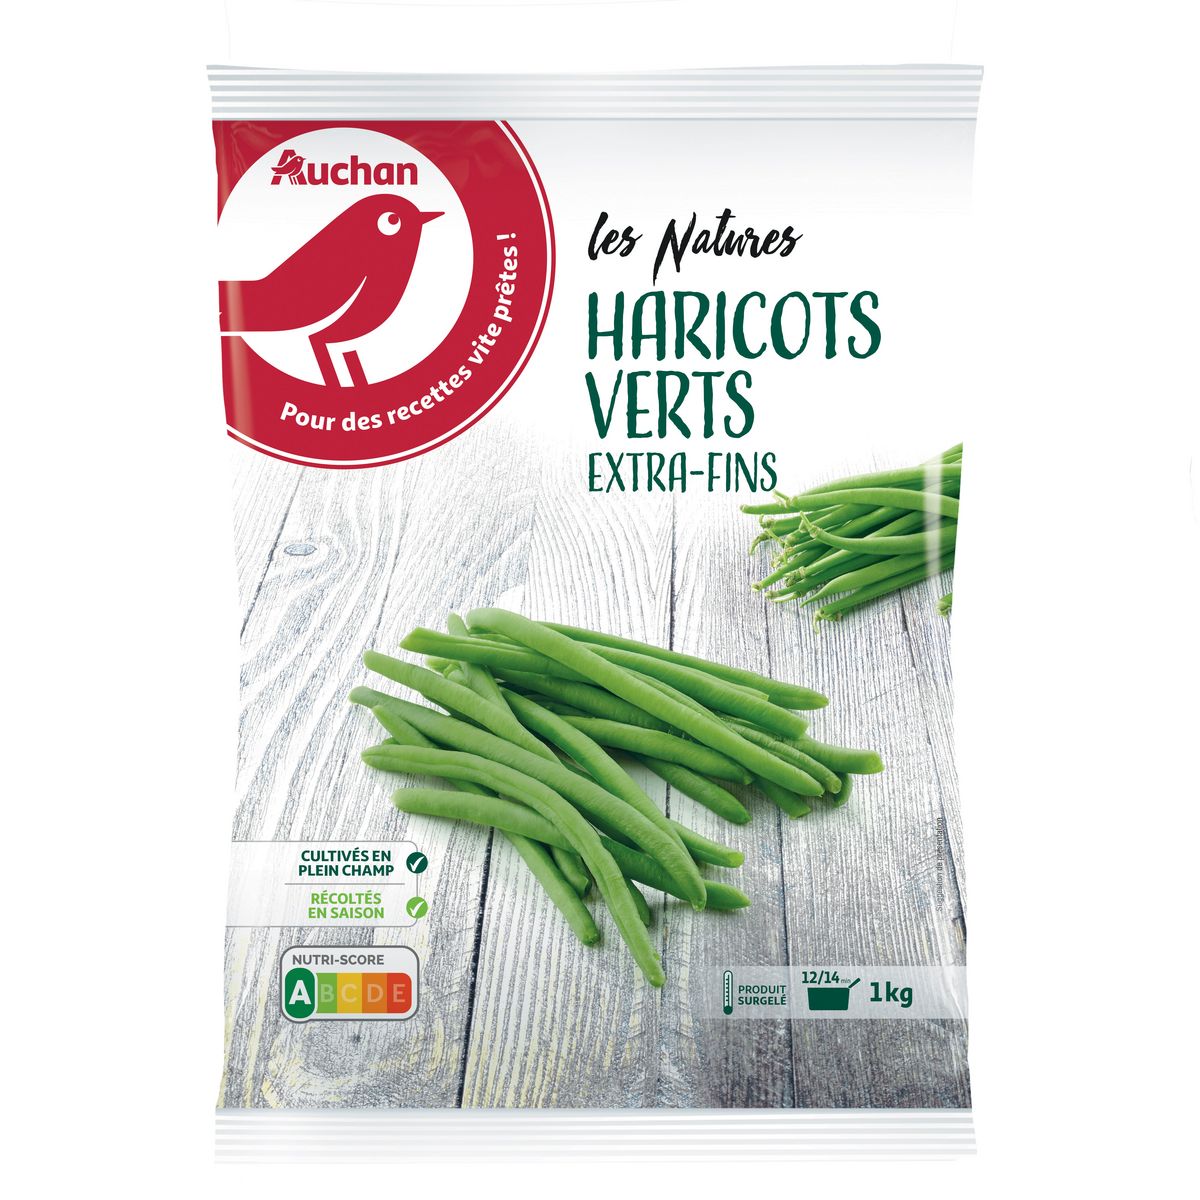 AUCHAN Haricots verts extra-fins 5 portions 1kg pas cher 